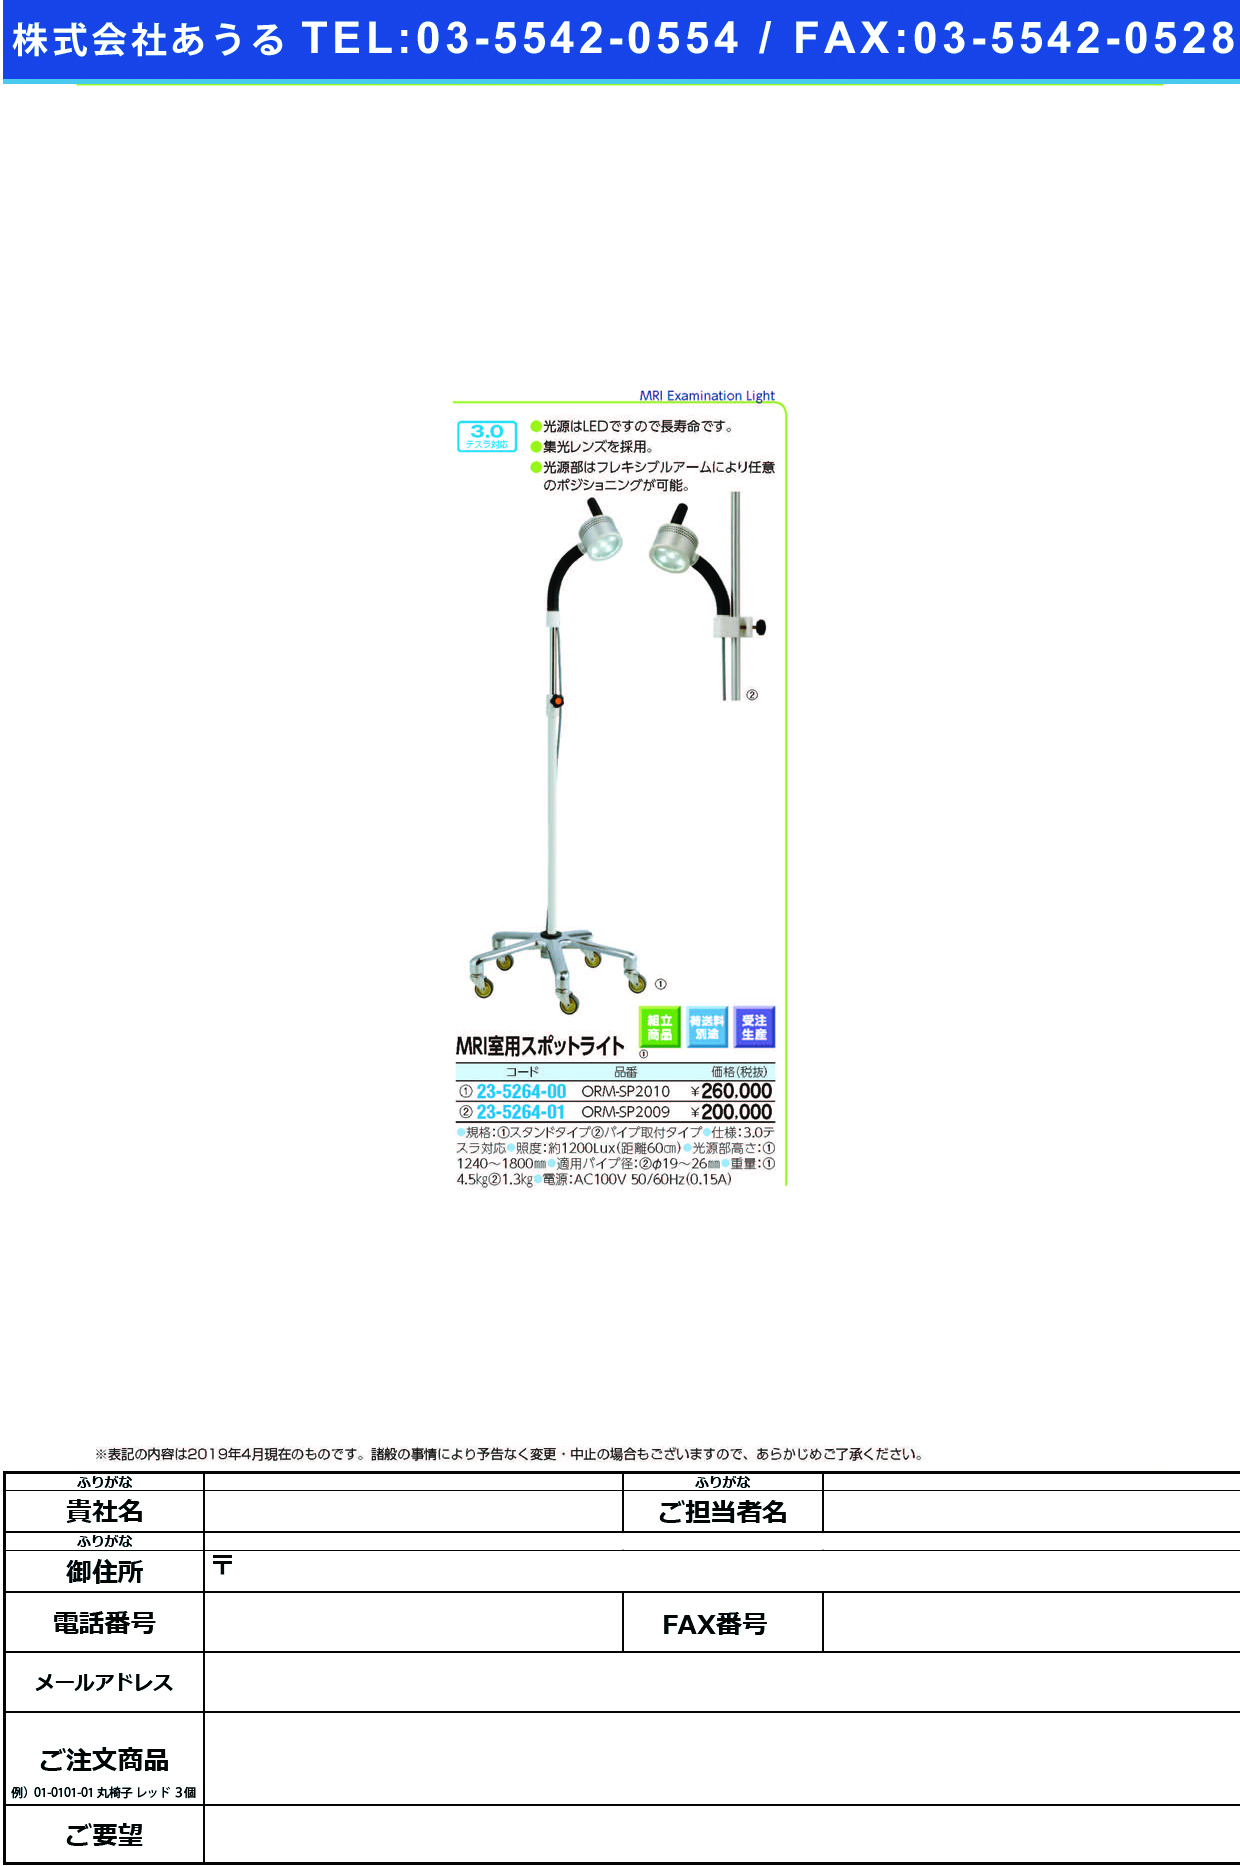 (23-5264-01)ＭＲＩ室用スポットライト ORM-SP2009(ﾊﾟｲﾌﾟﾄﾘﾂｹ MRIｼﾂﾖｳｽﾎﾟｯﾄﾗｲﾄ【1台単位】【2019年カタログ商品】